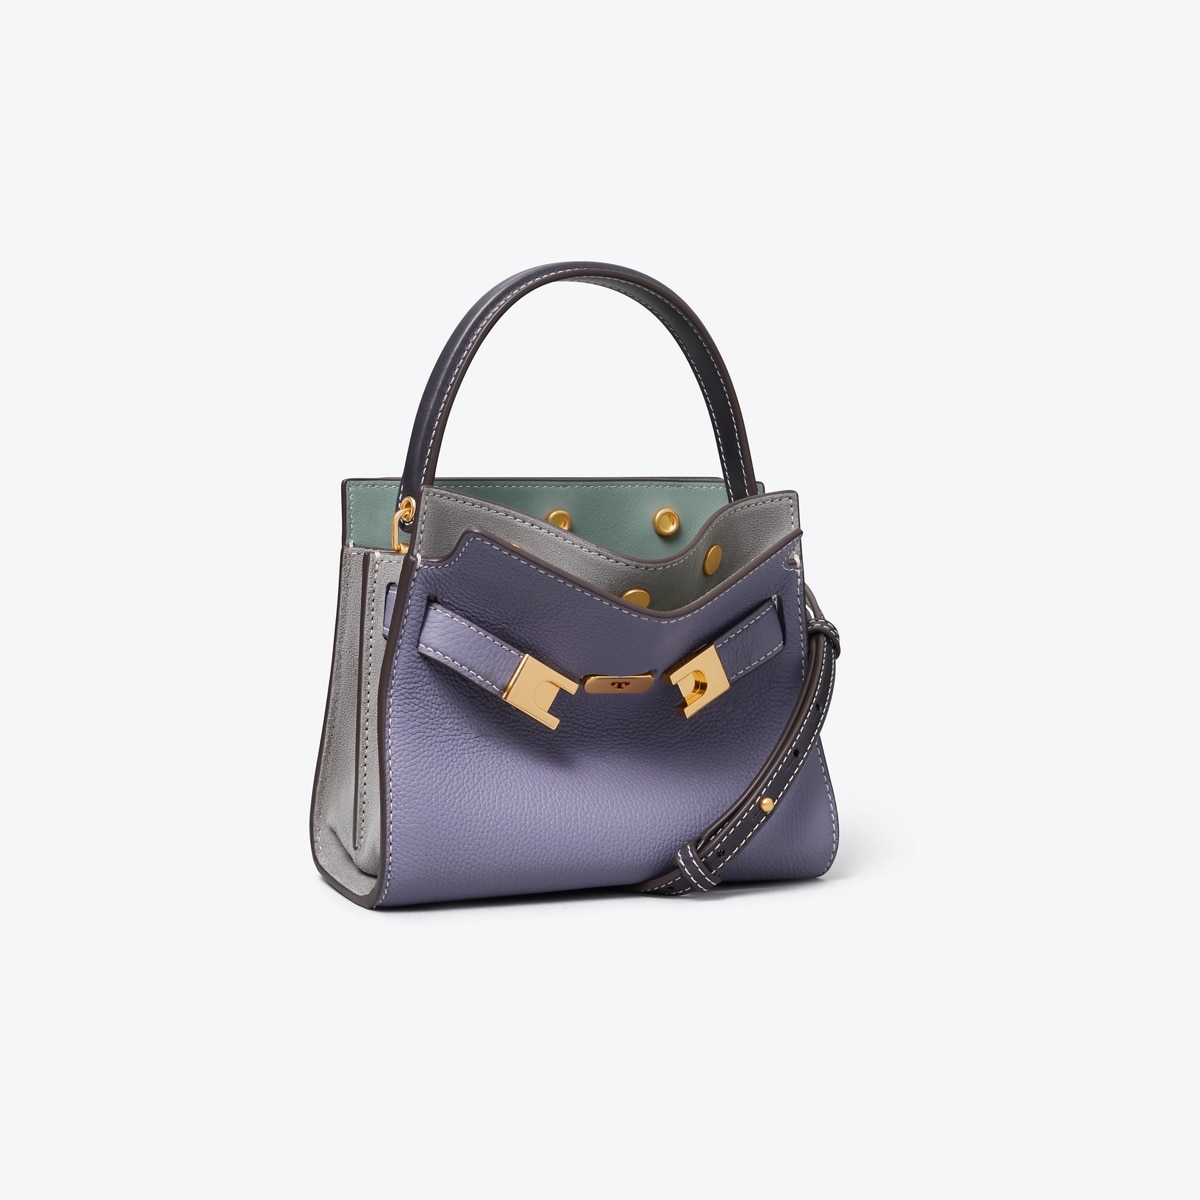 Lee Radziwill Pebbled Petite Double Bag: Women's Handbags | Satchels ...